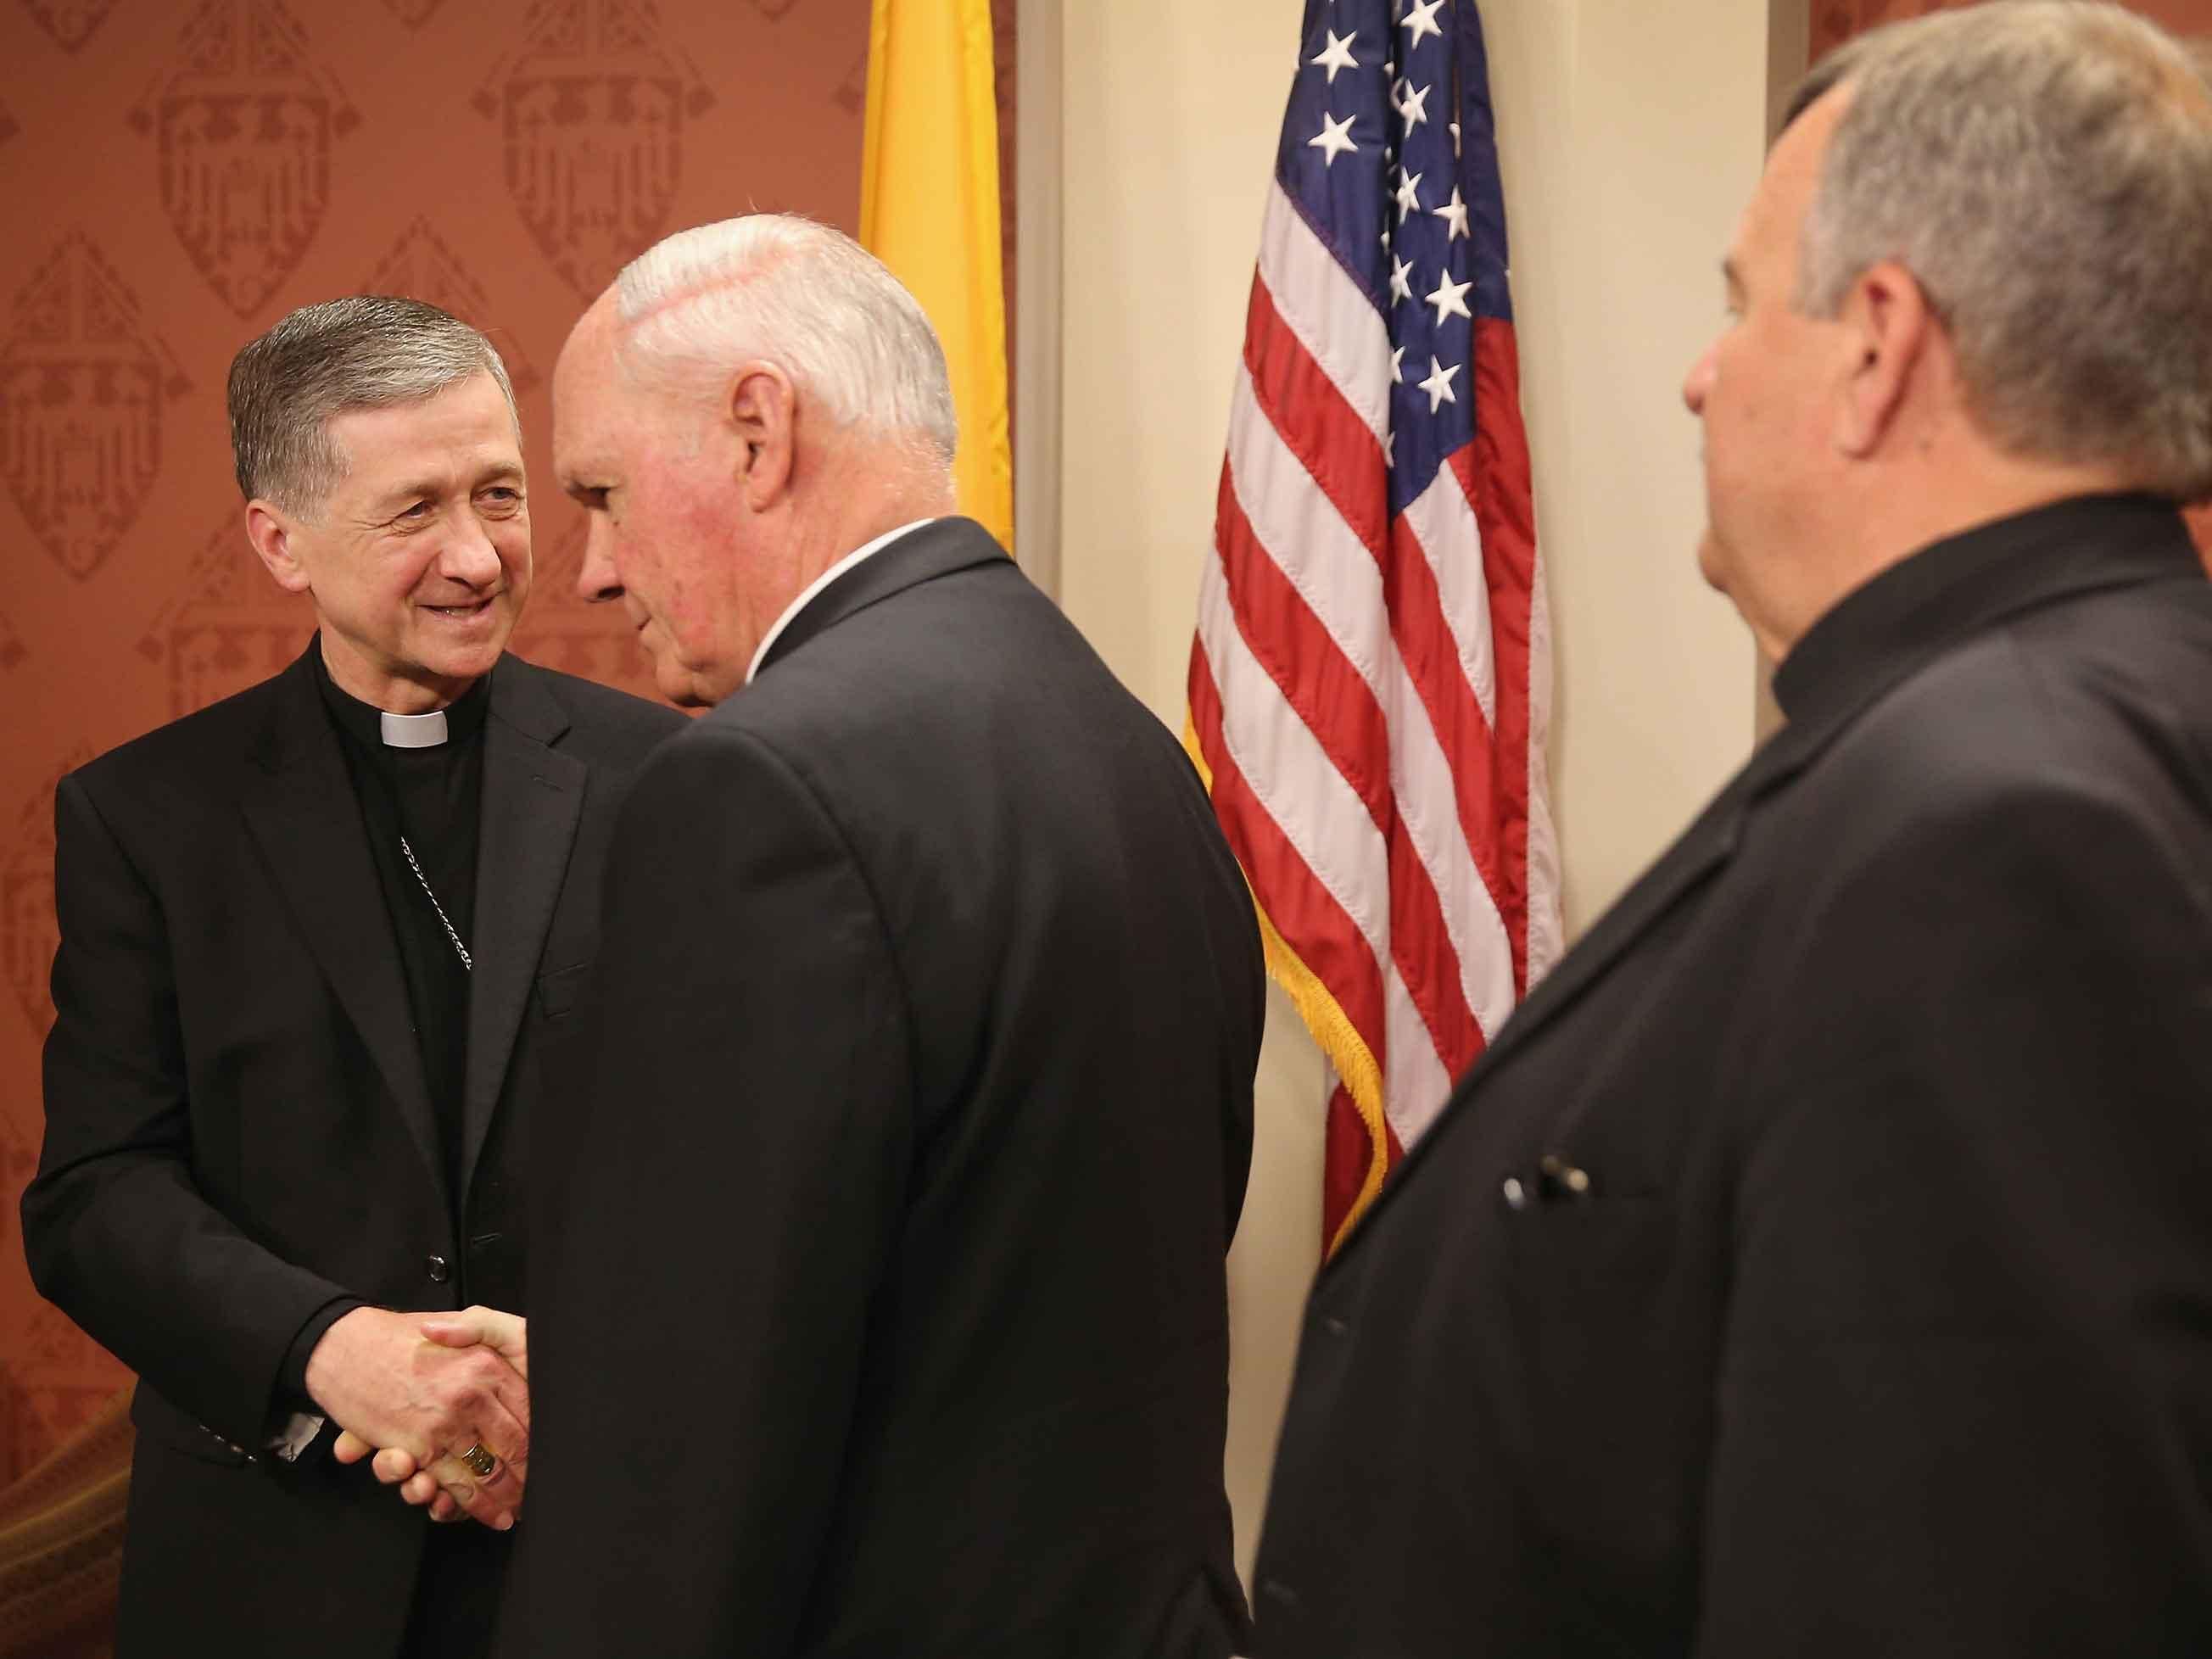 Catholics: Antigay Leaders Get Boot, a Progressive Becomes American Archbishop
